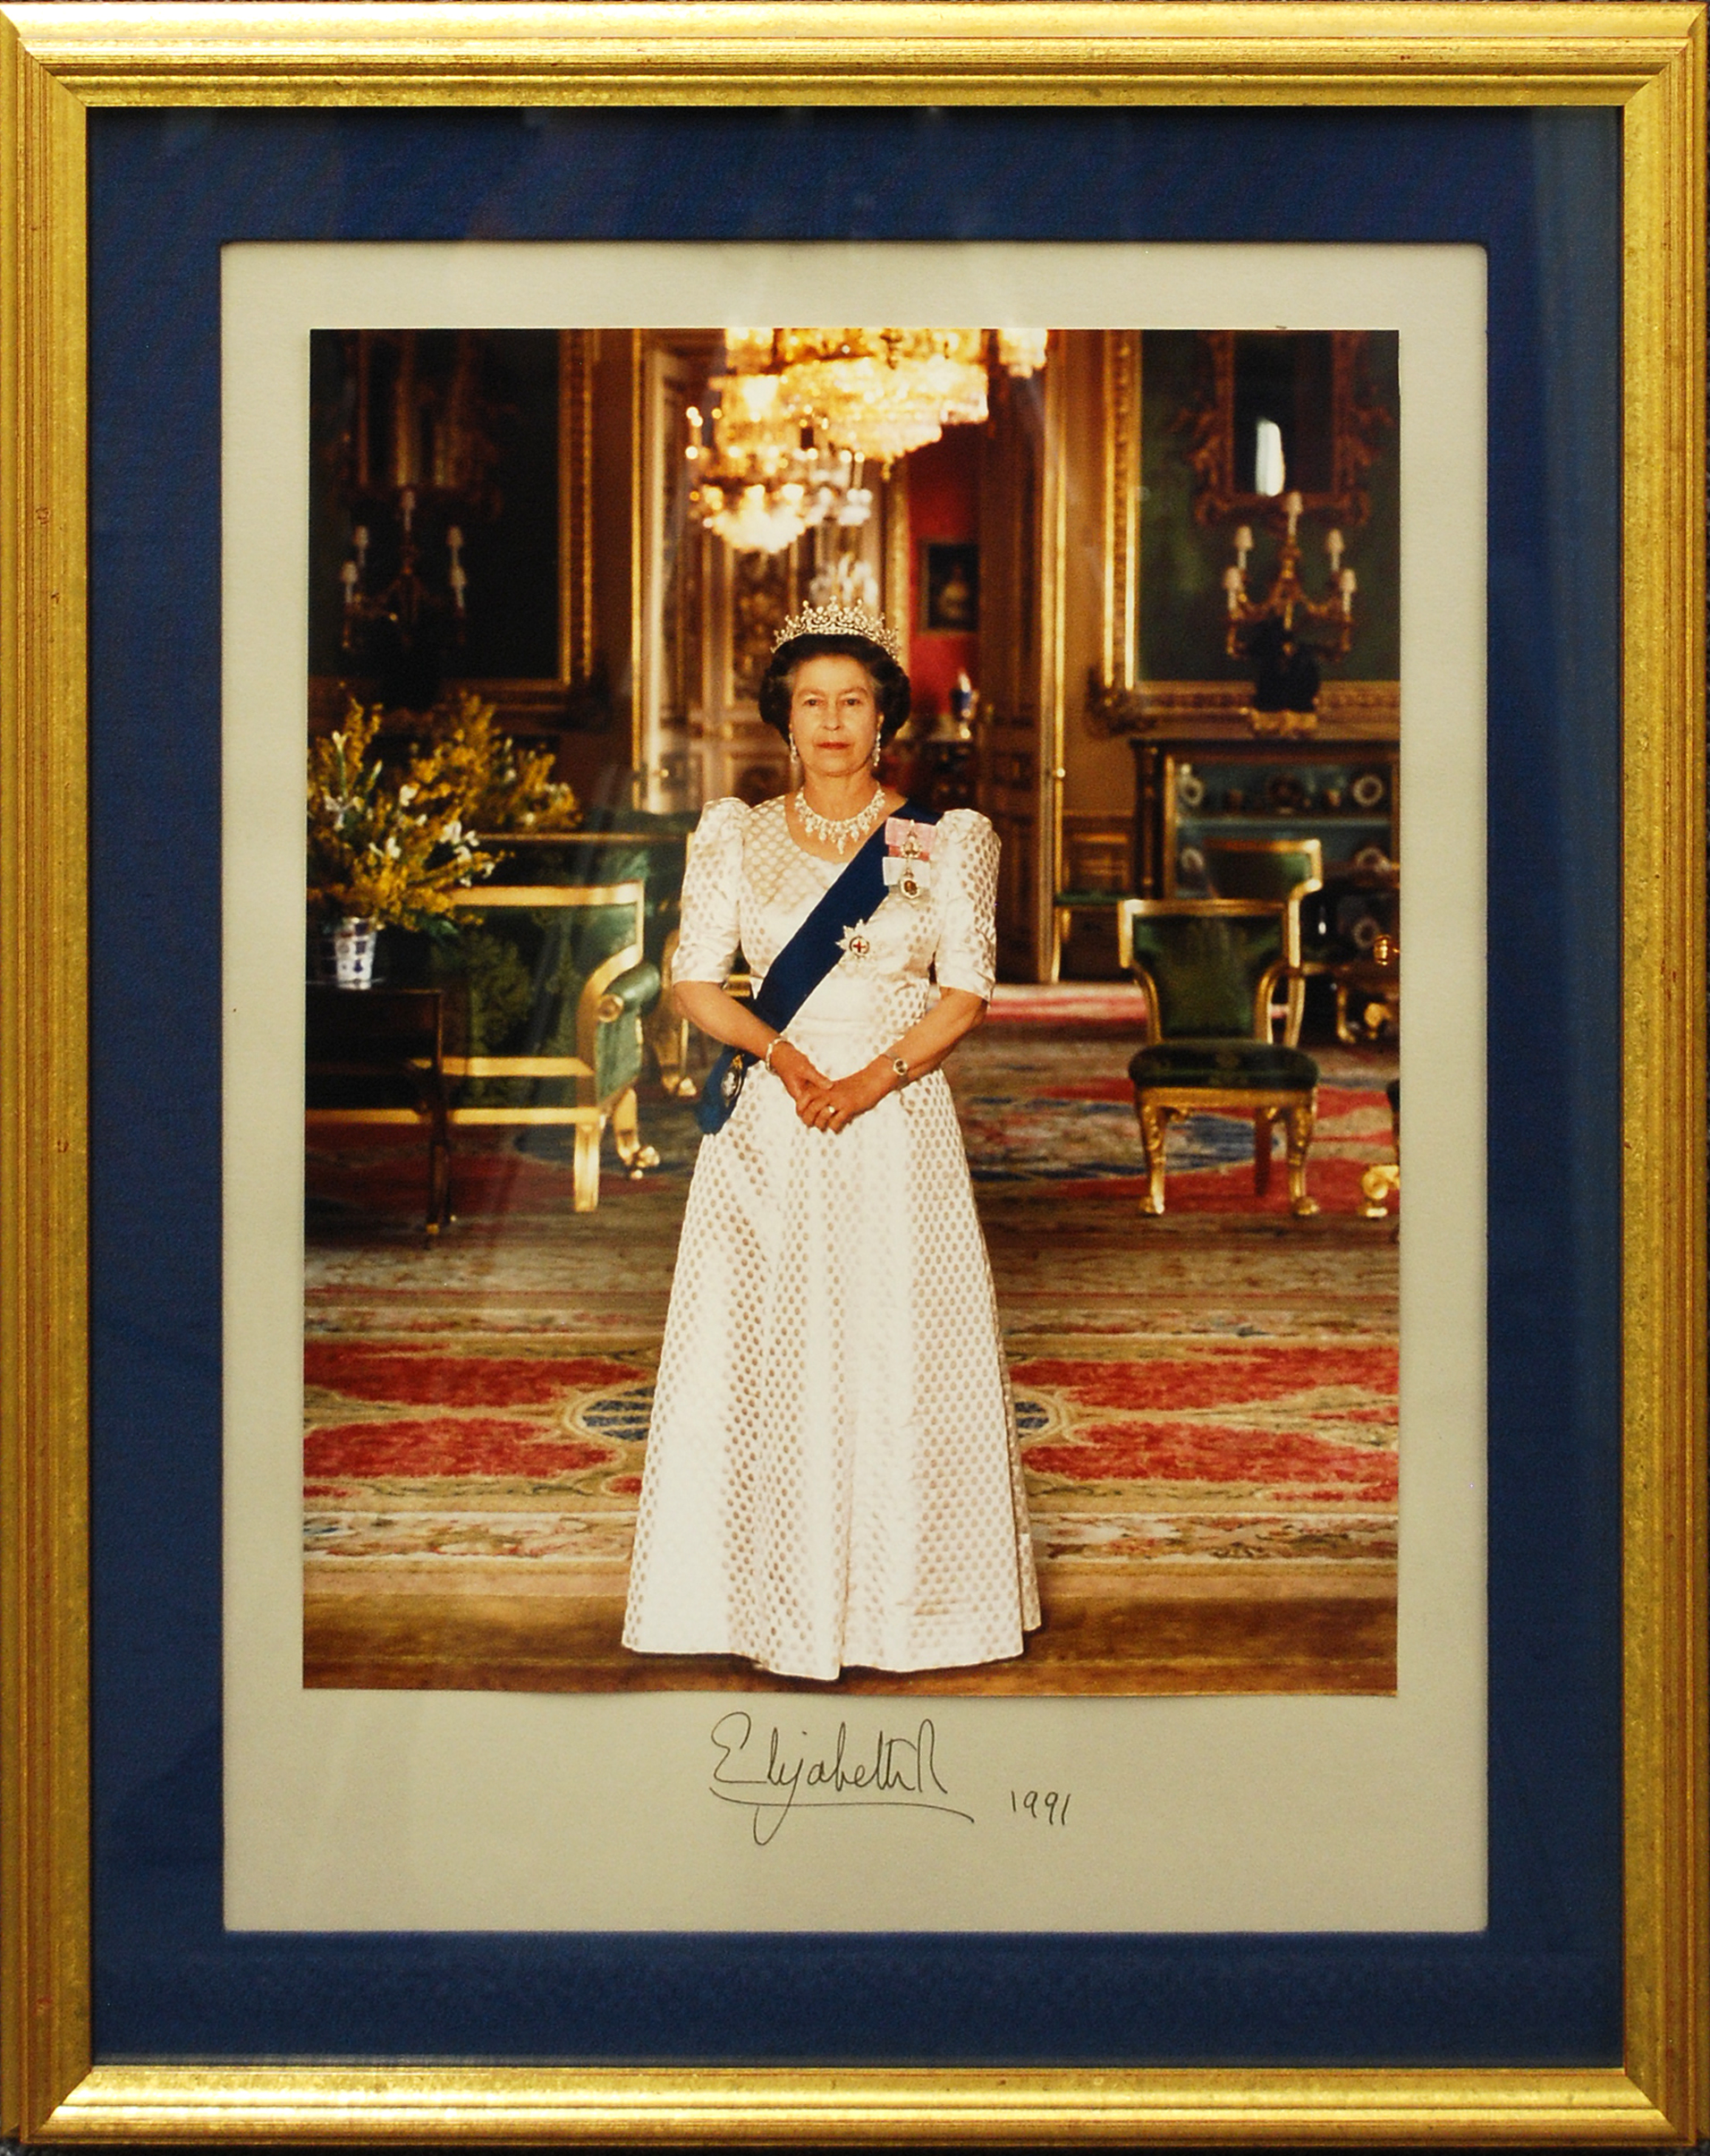 Object: Photos & letter (Queen Elizabeth II)